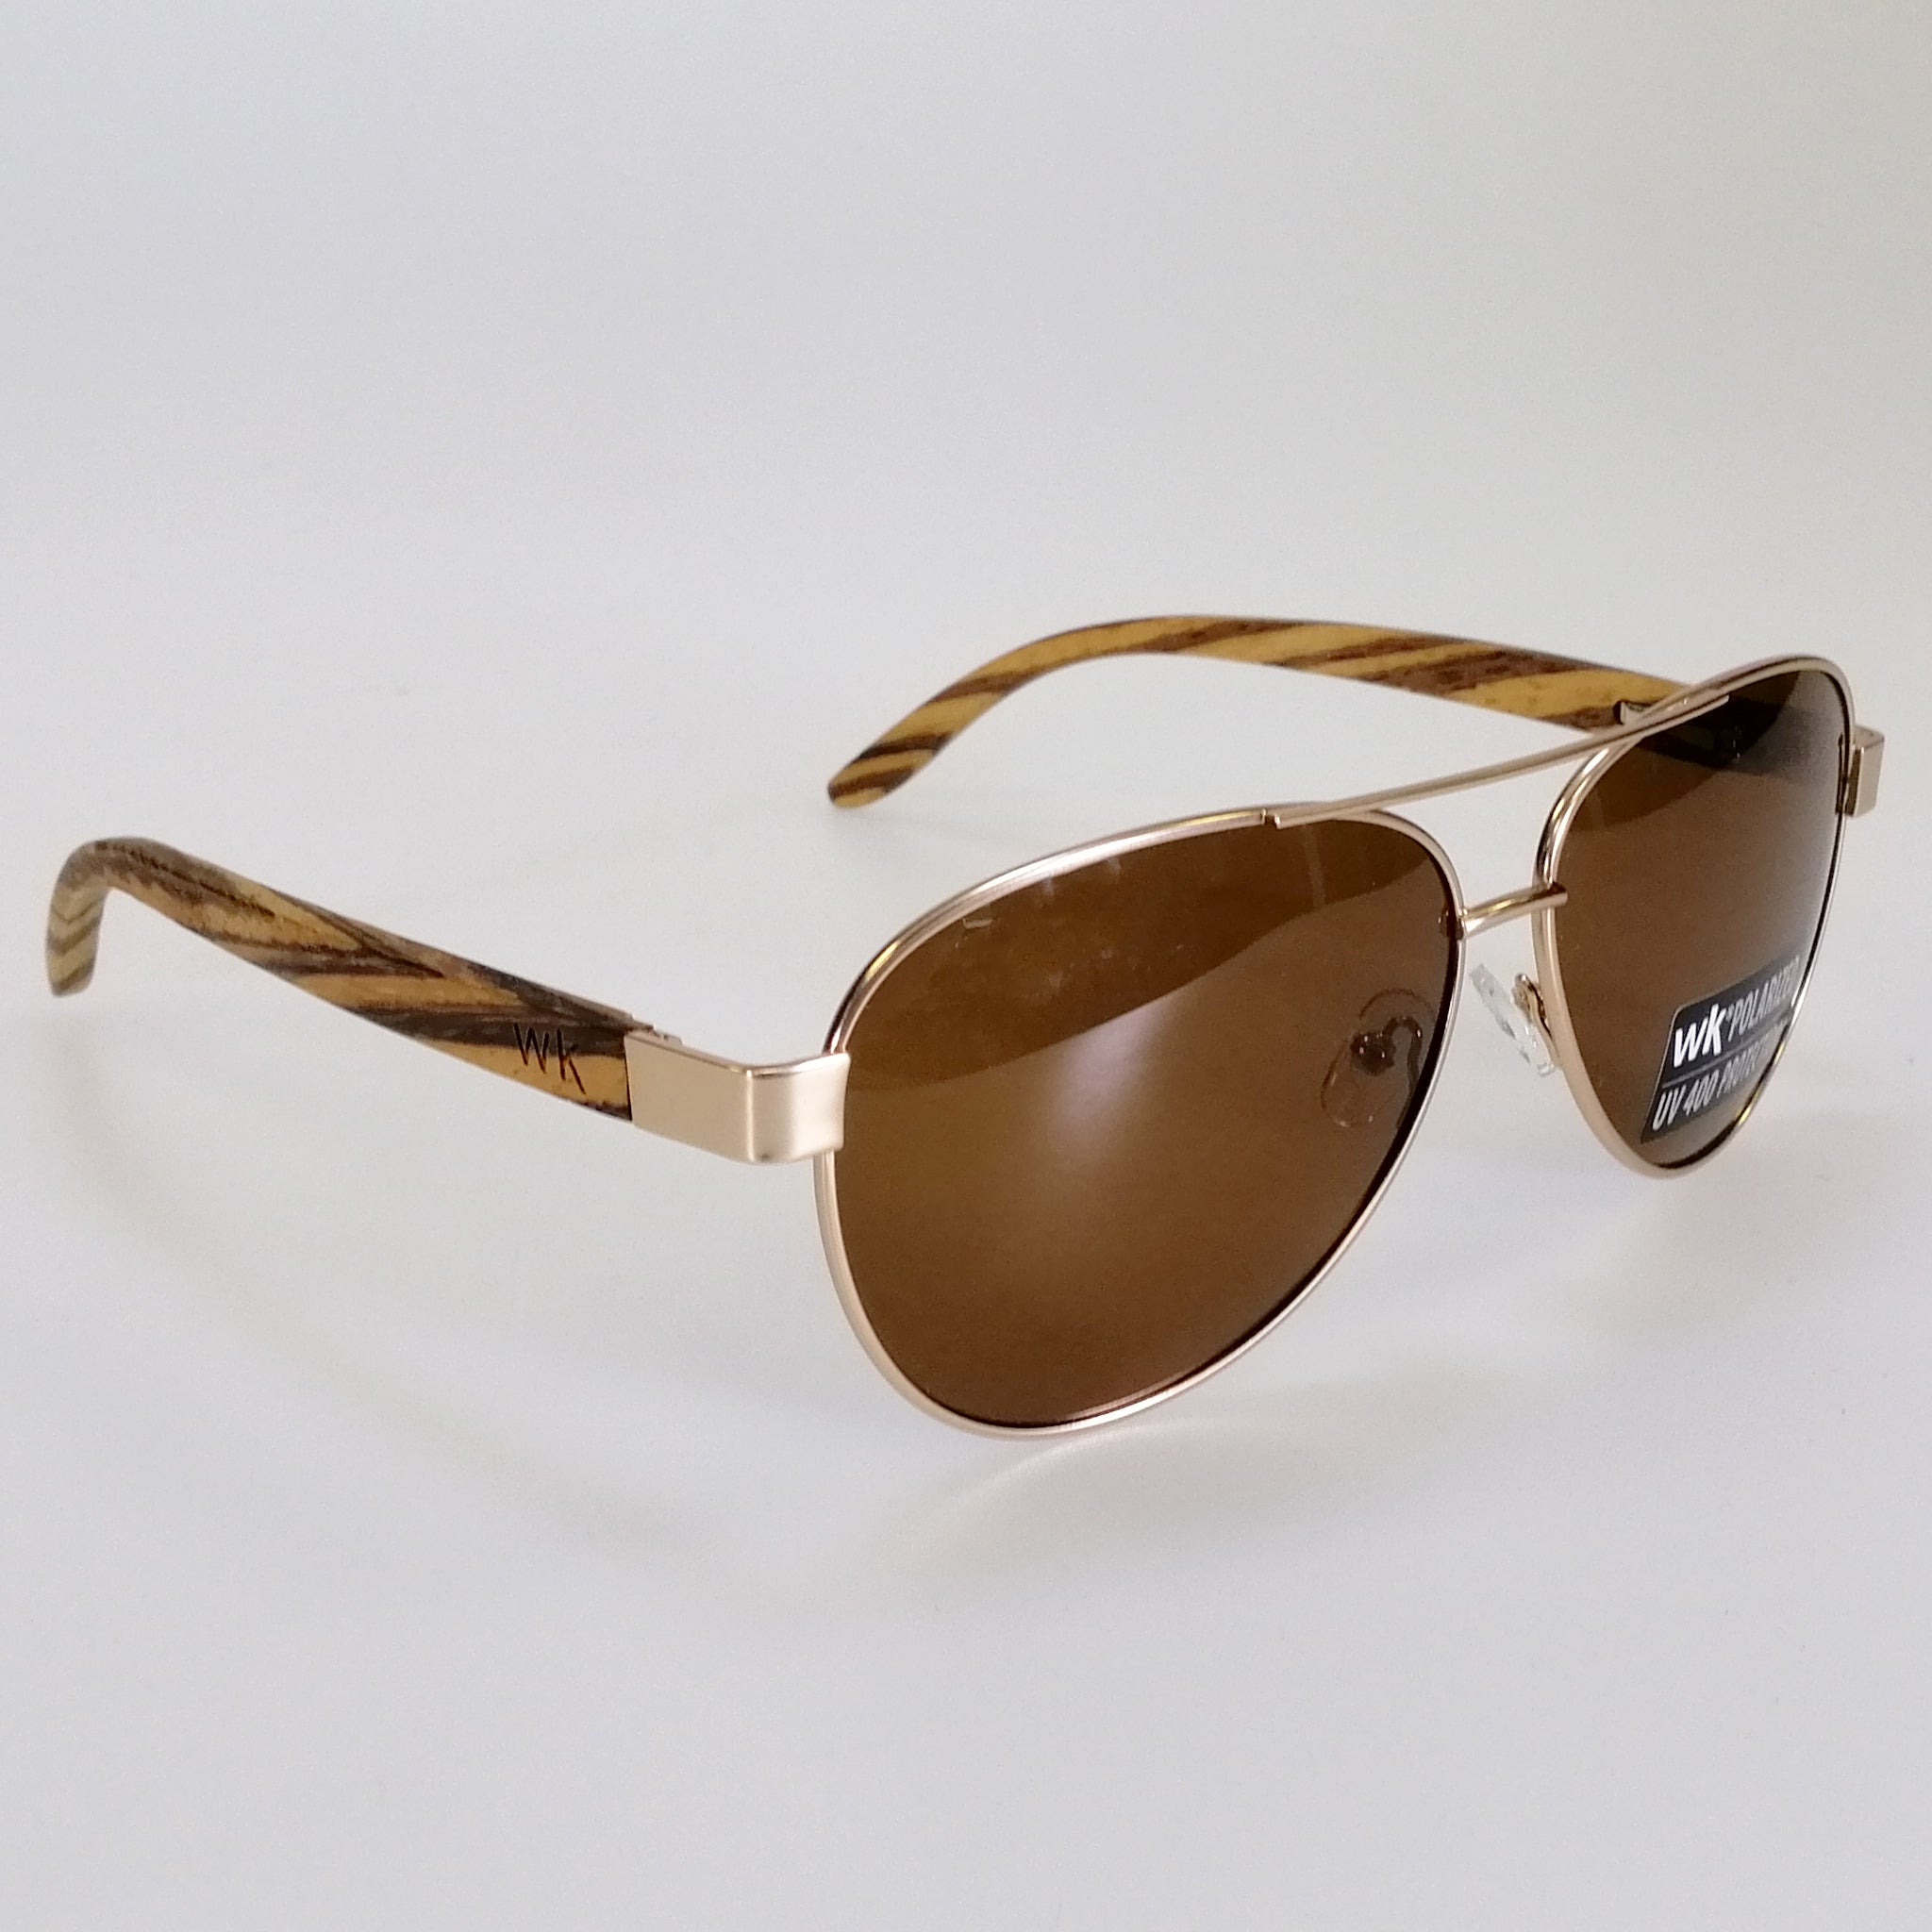 Wild Kiwi Sunglasses  -“ Aviator